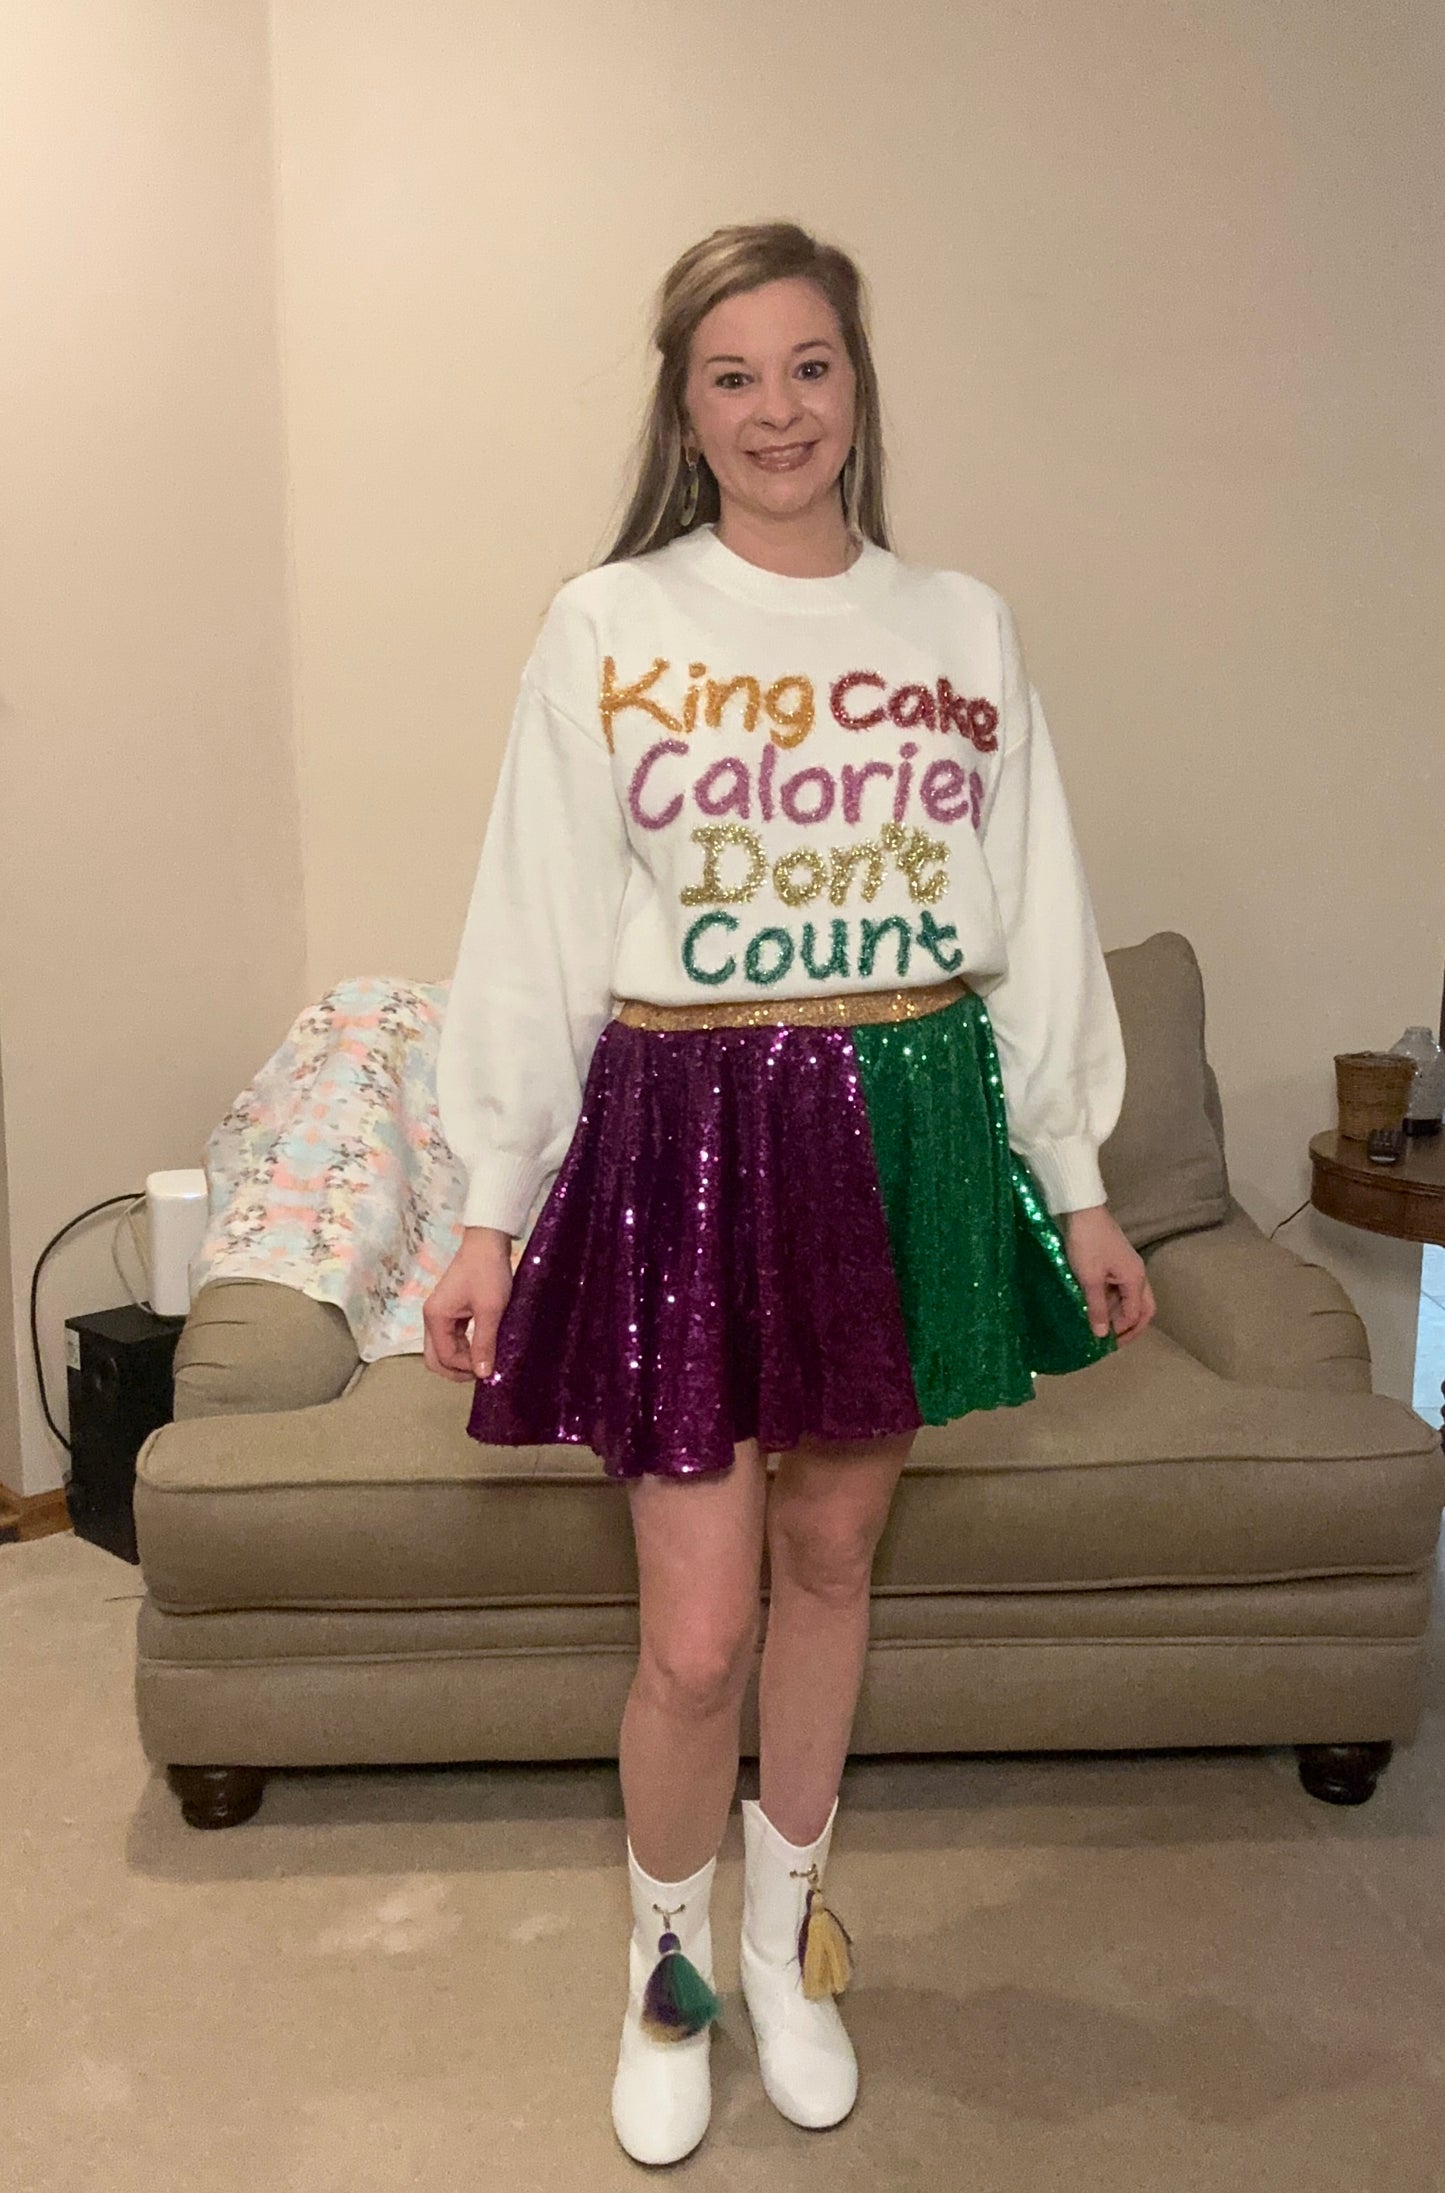 Sequin Mardi Gras Skirt